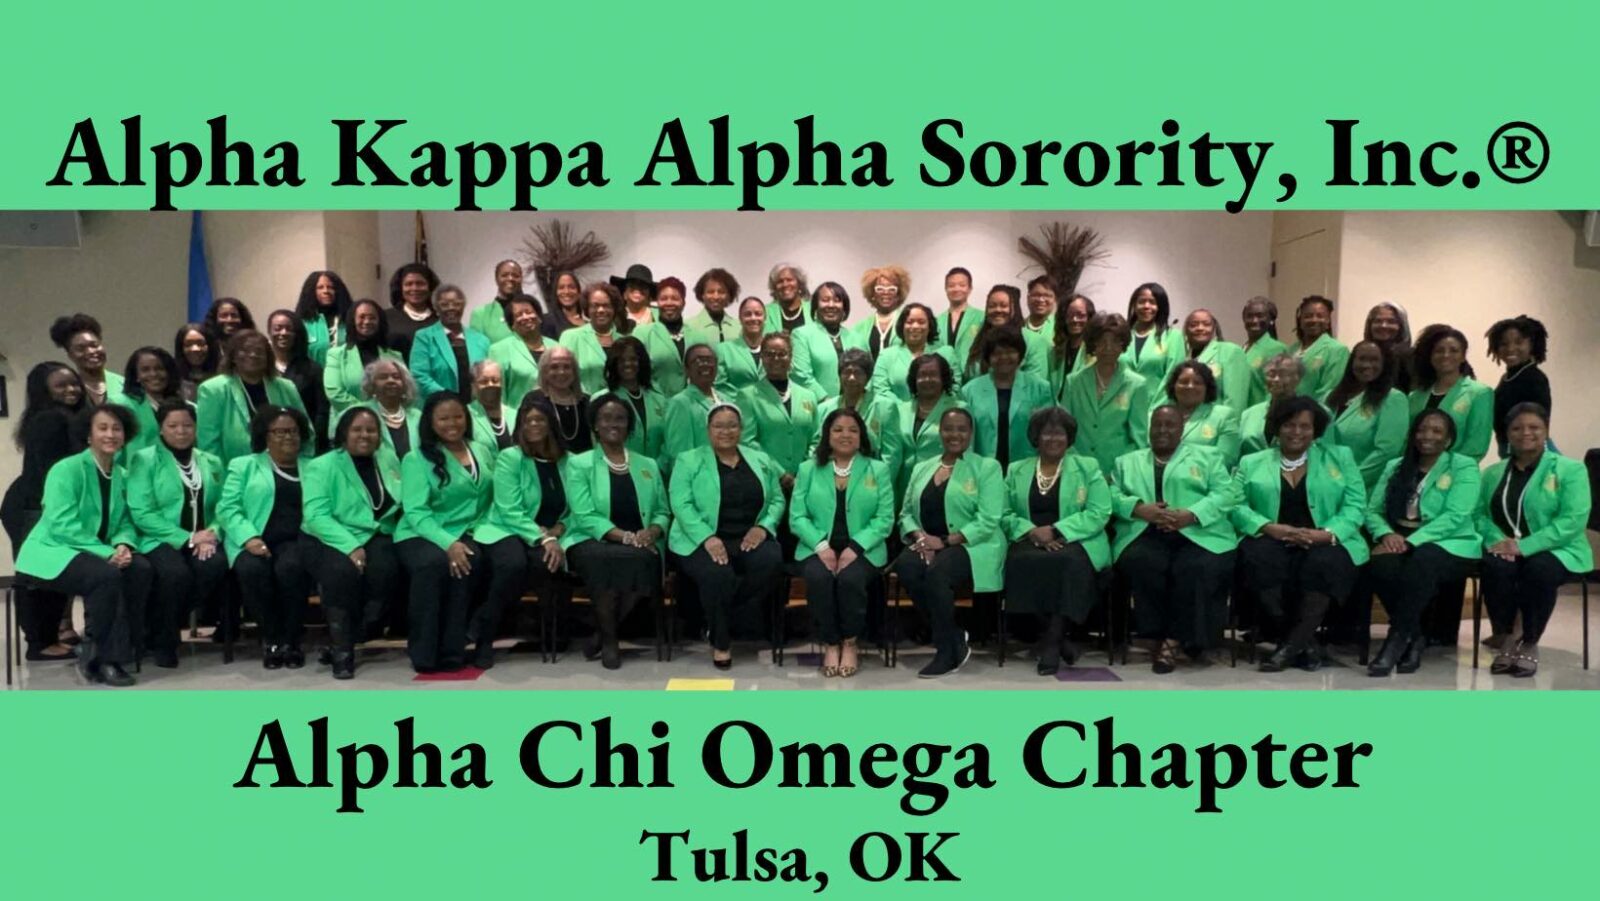 Alpha Kappa Alpha Sorority Celebrates Regional Conference In Tulsa The Oklahoma Eagle